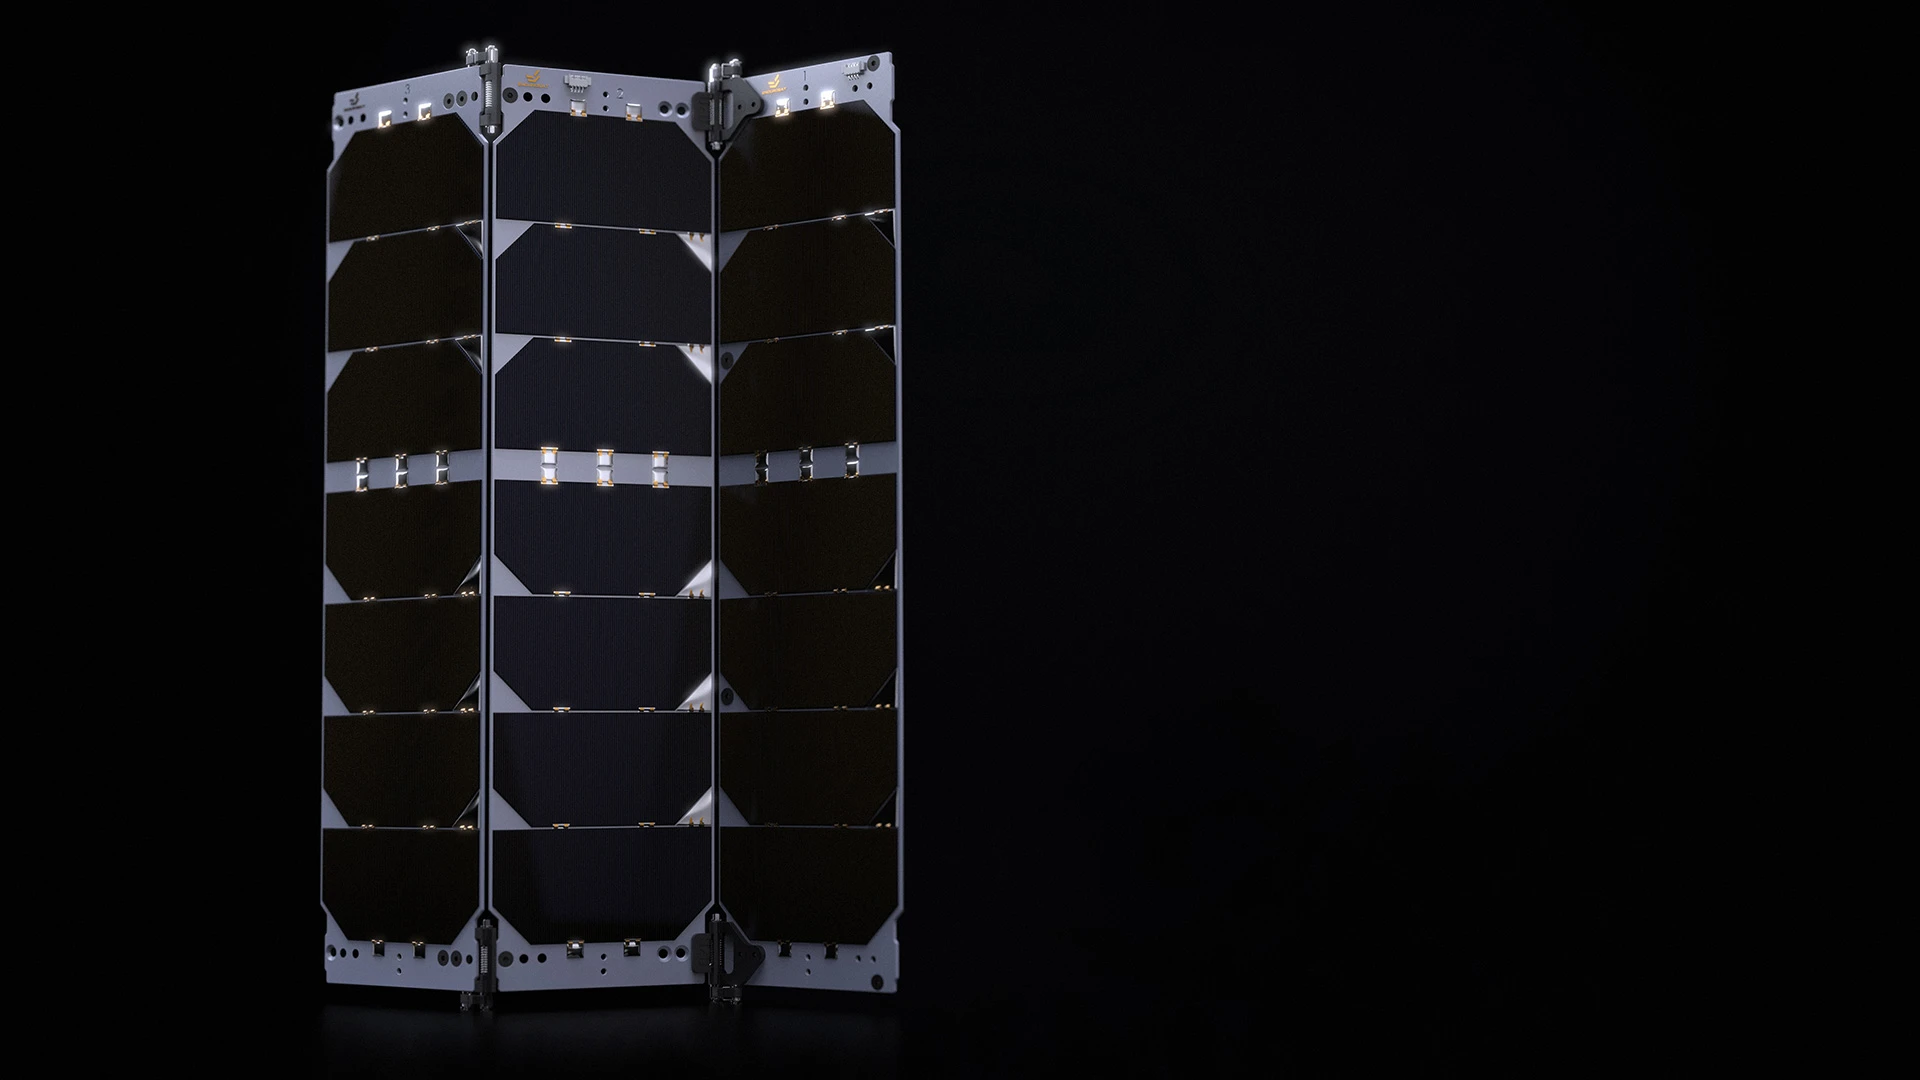 3U X Y Deployable Solar Array web render 3